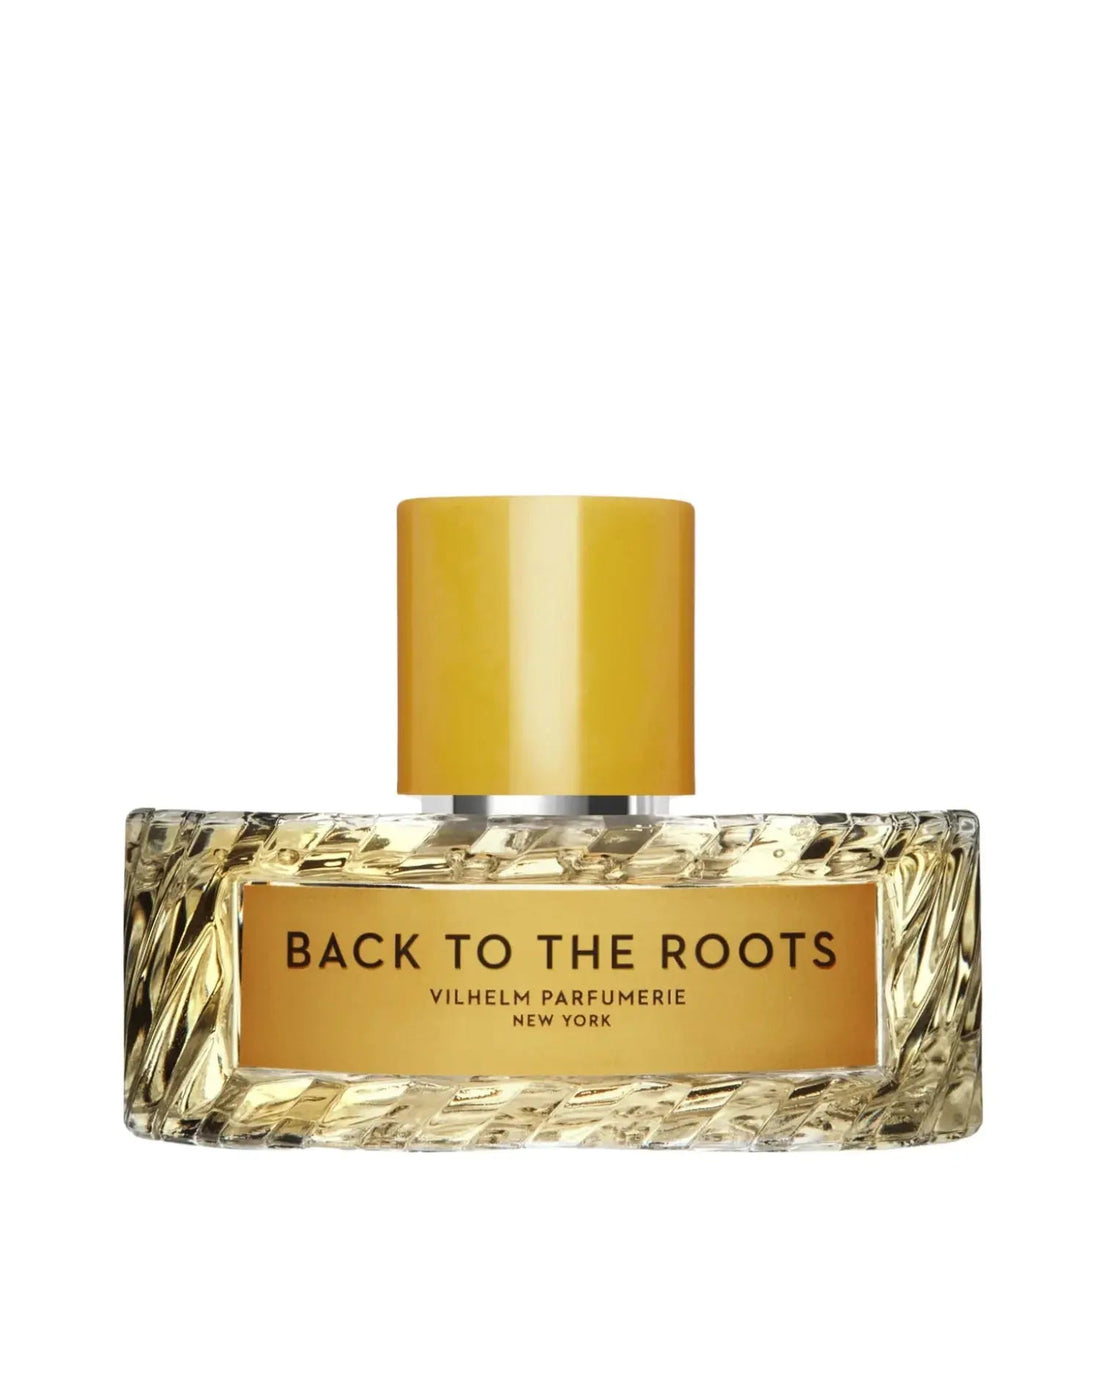 Back to the roots Vilhelm parfumerie - 50 ml